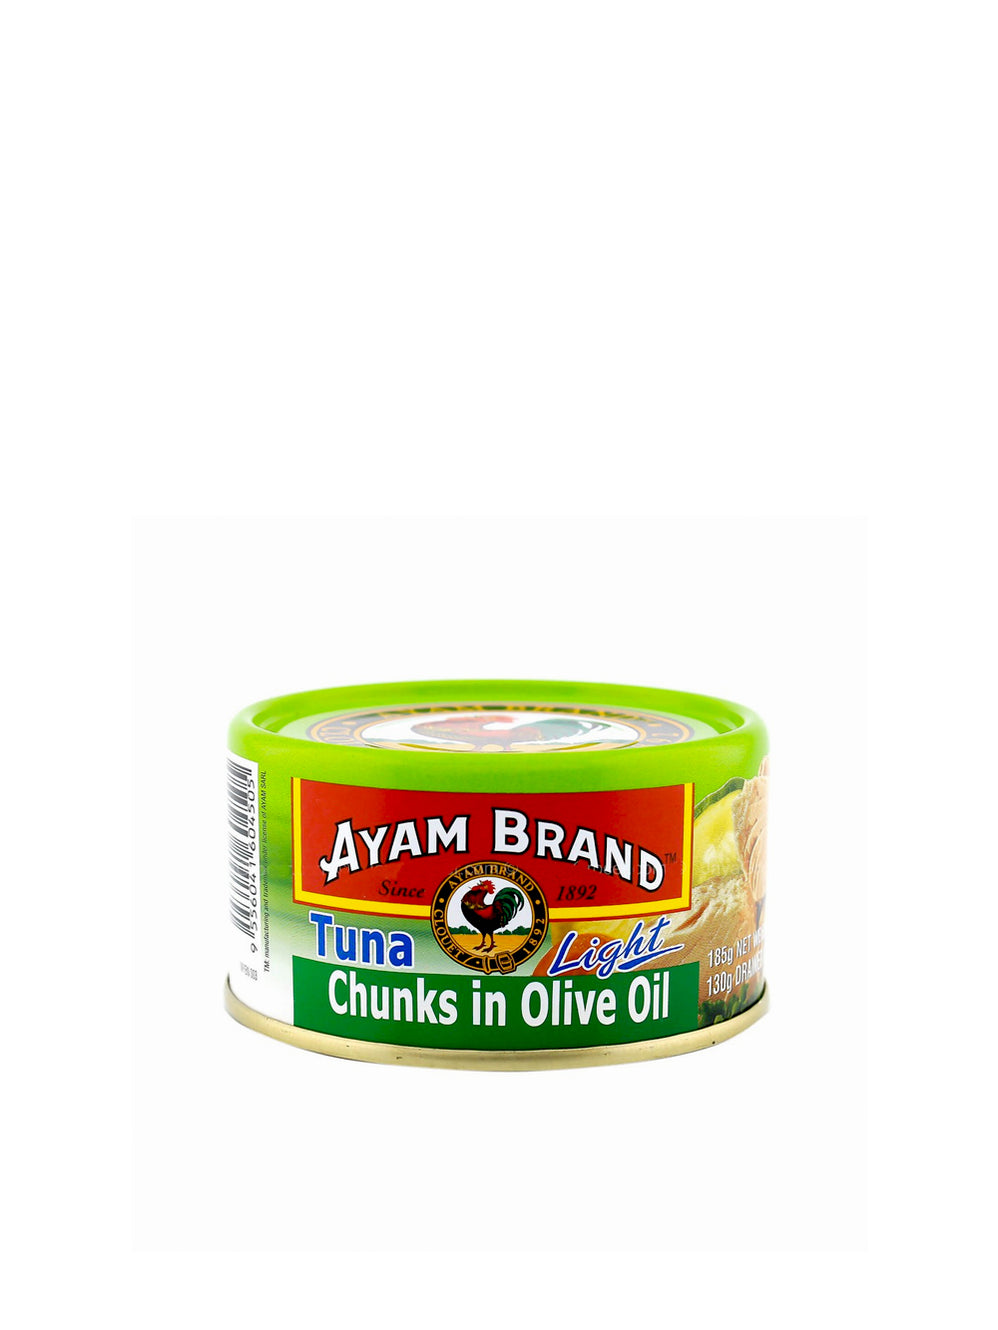 Ayam Brand Tuna Chunks in Olive Oil 雄雞標橄欖金槍魚塊 — Jutongon